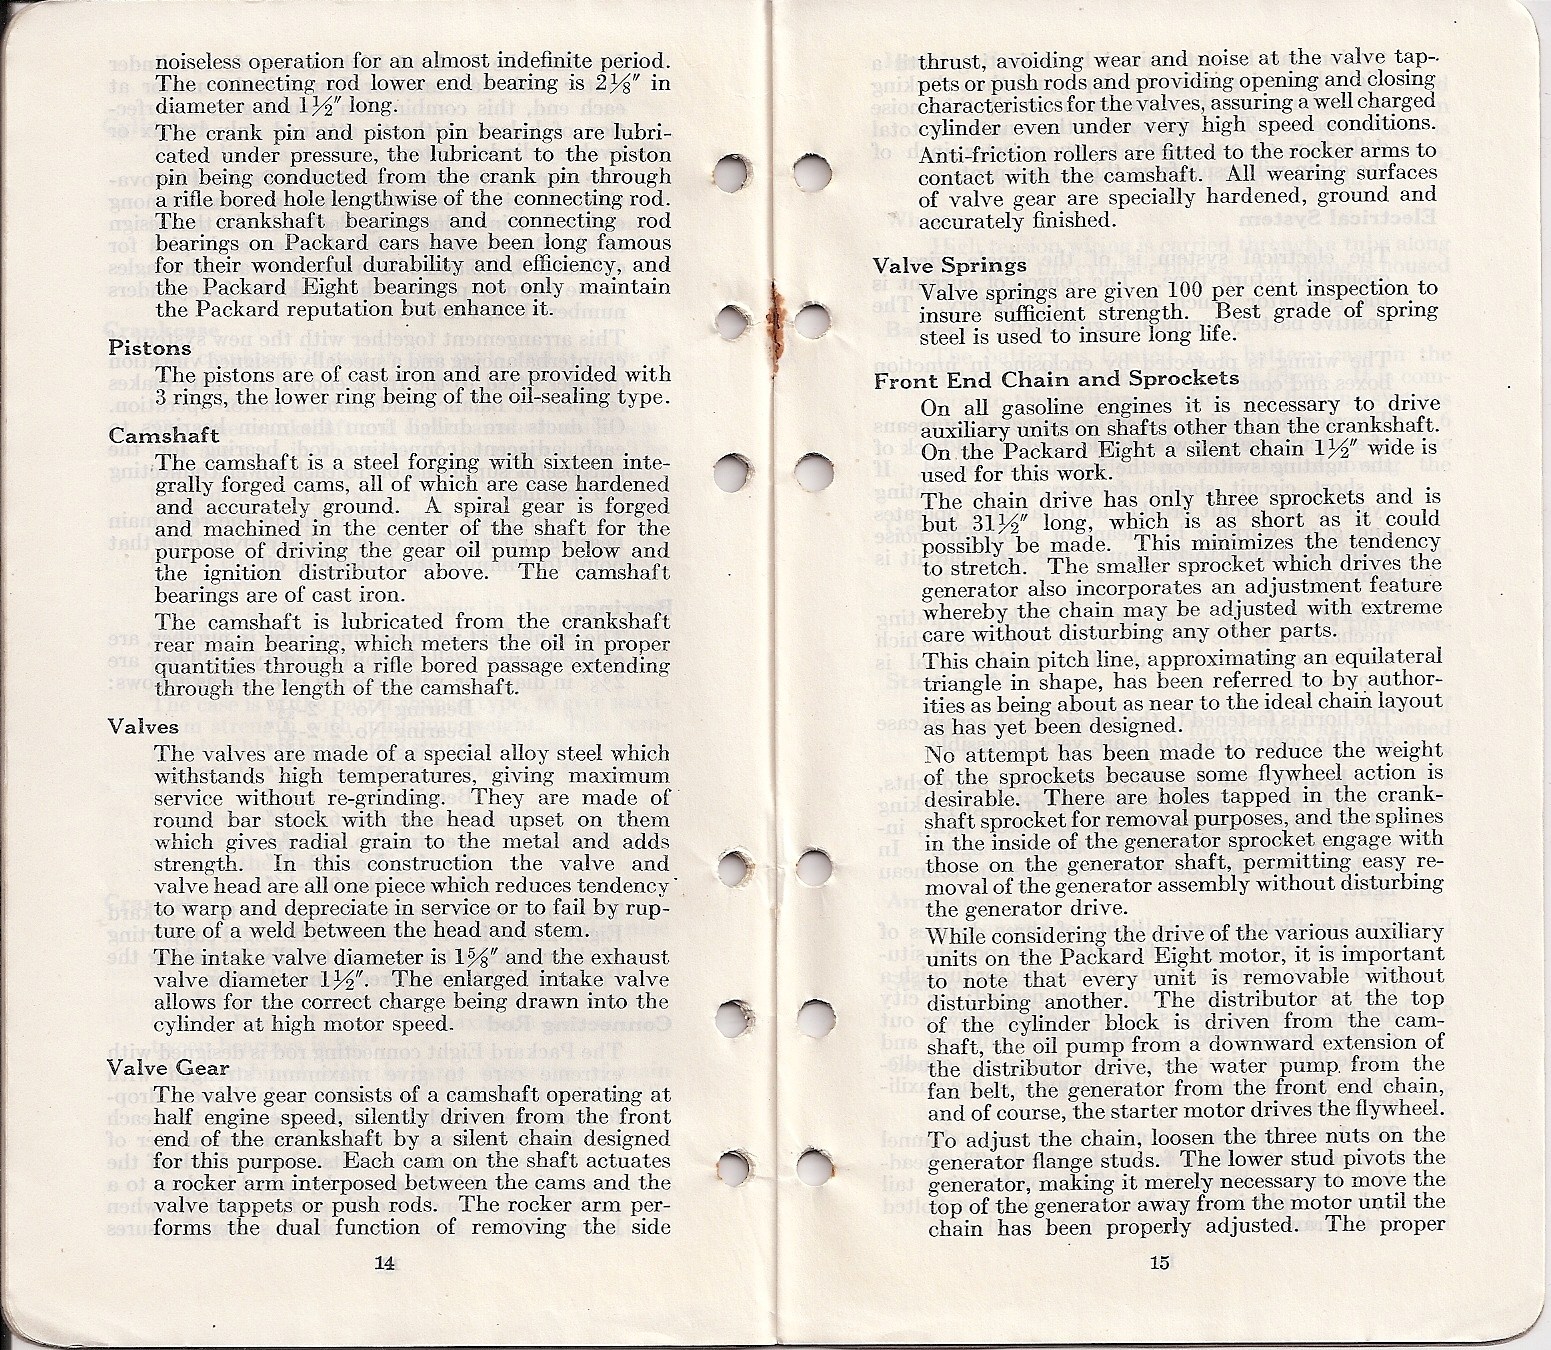 n_1925 Packard Eight Facts Book-14-15.jpg